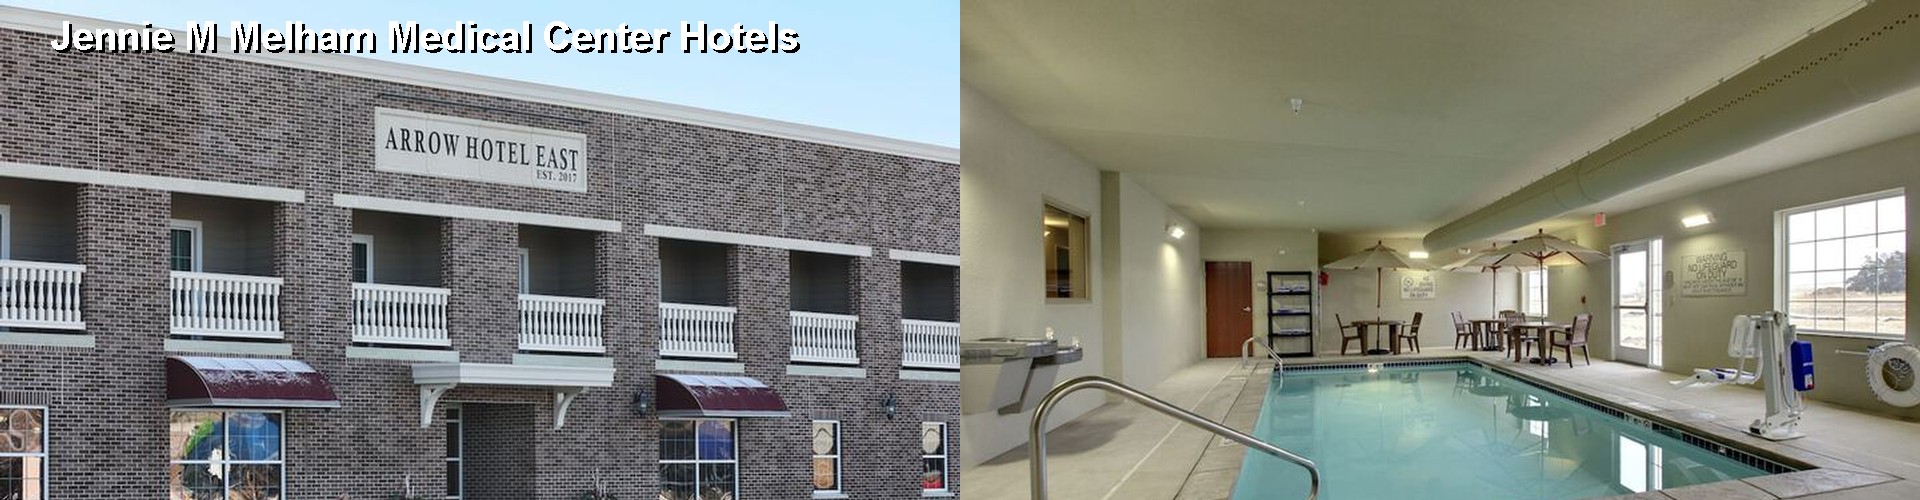 2 Best Hotels near Jennie M Melham Medical Center